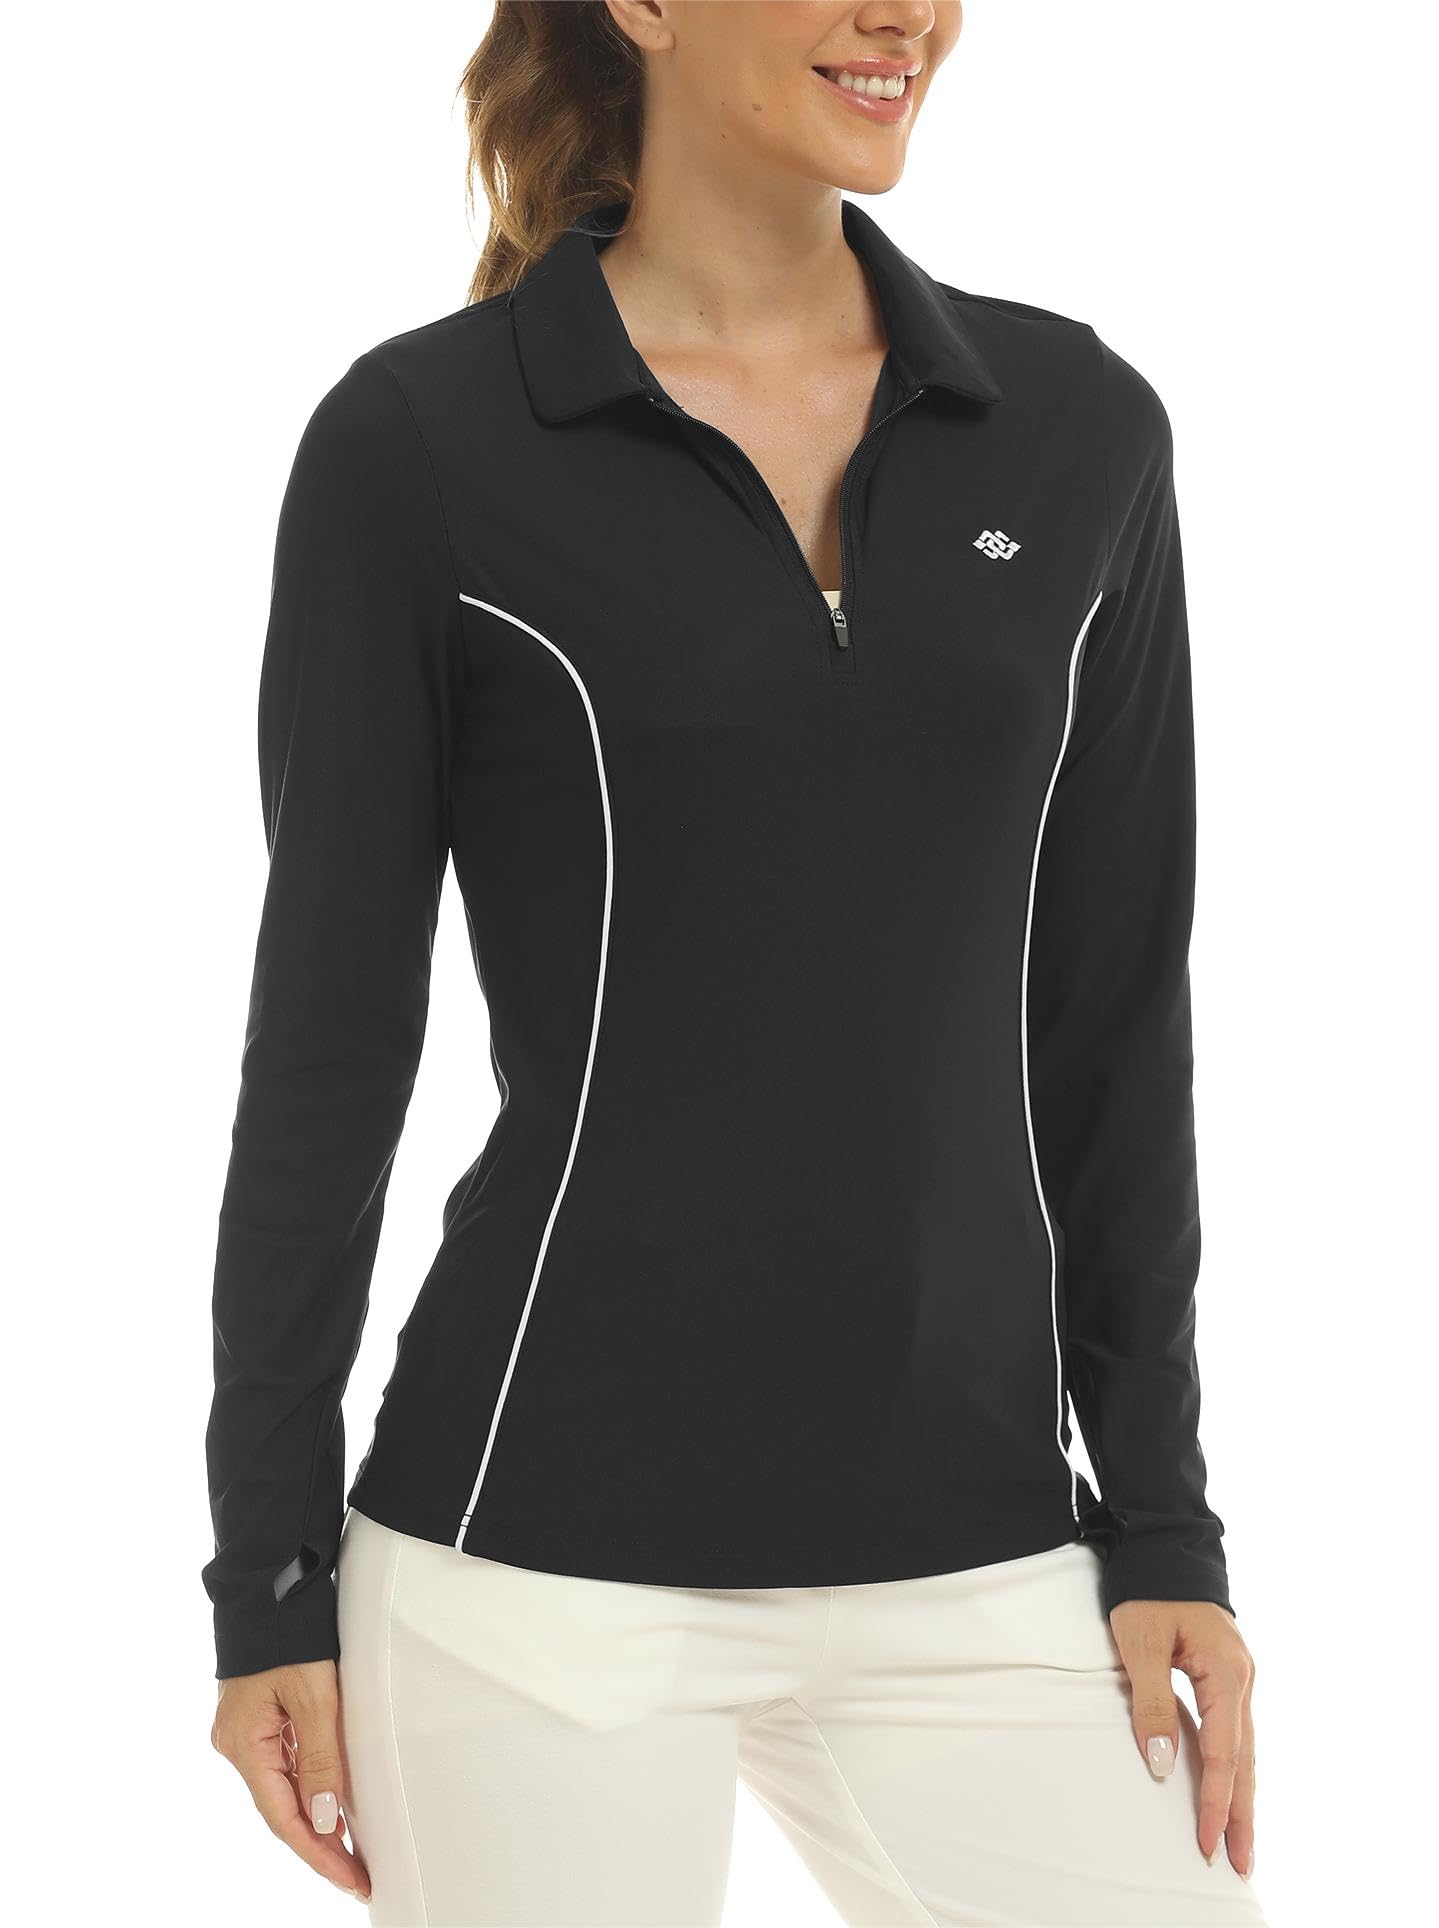 prix de gros AjezMax Polo Femme Shirt Manches Longues Sport Respirant Polo Golf Tops avec Zip Lfk3jhkxF mode